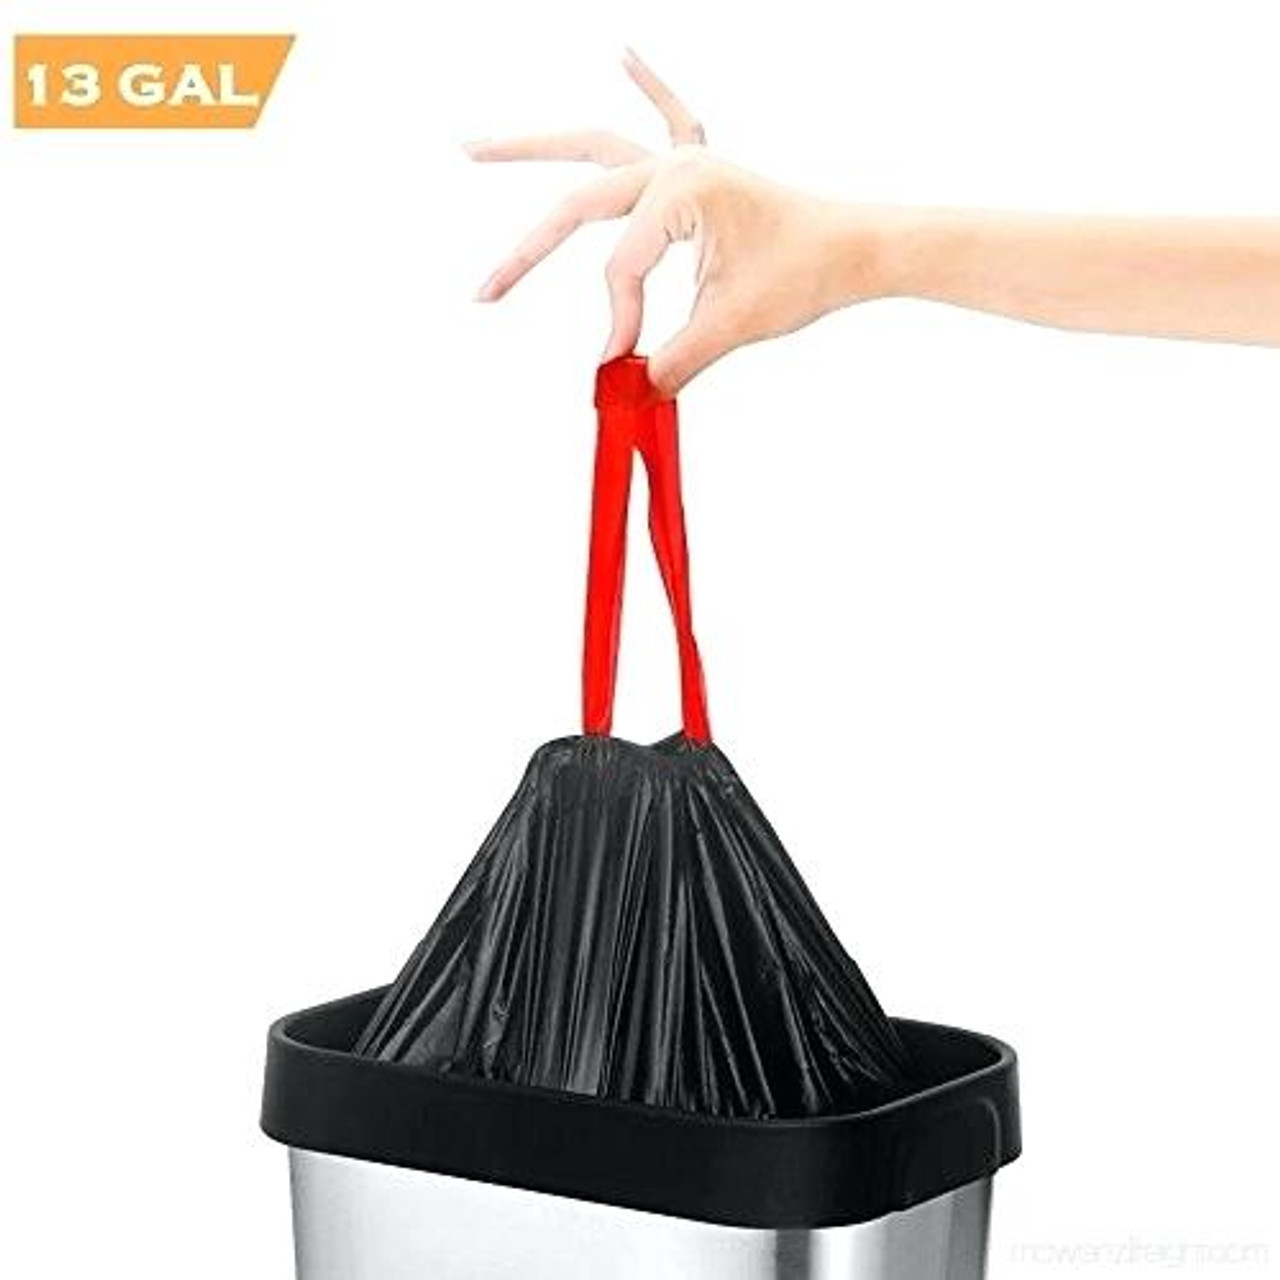 10 gallon drawstring trash bags